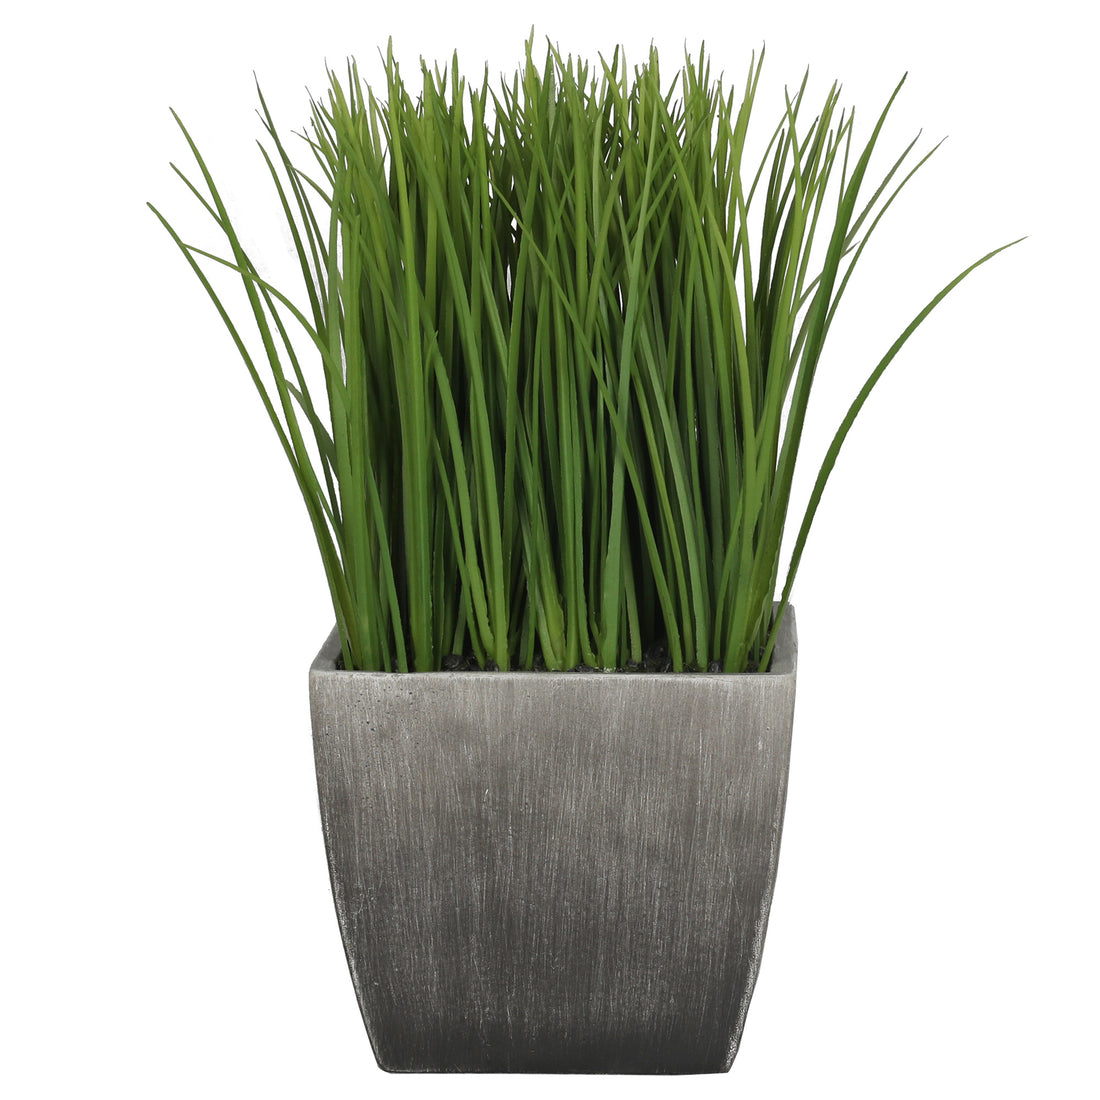 Grass verde artificial de 33 cm con macetero